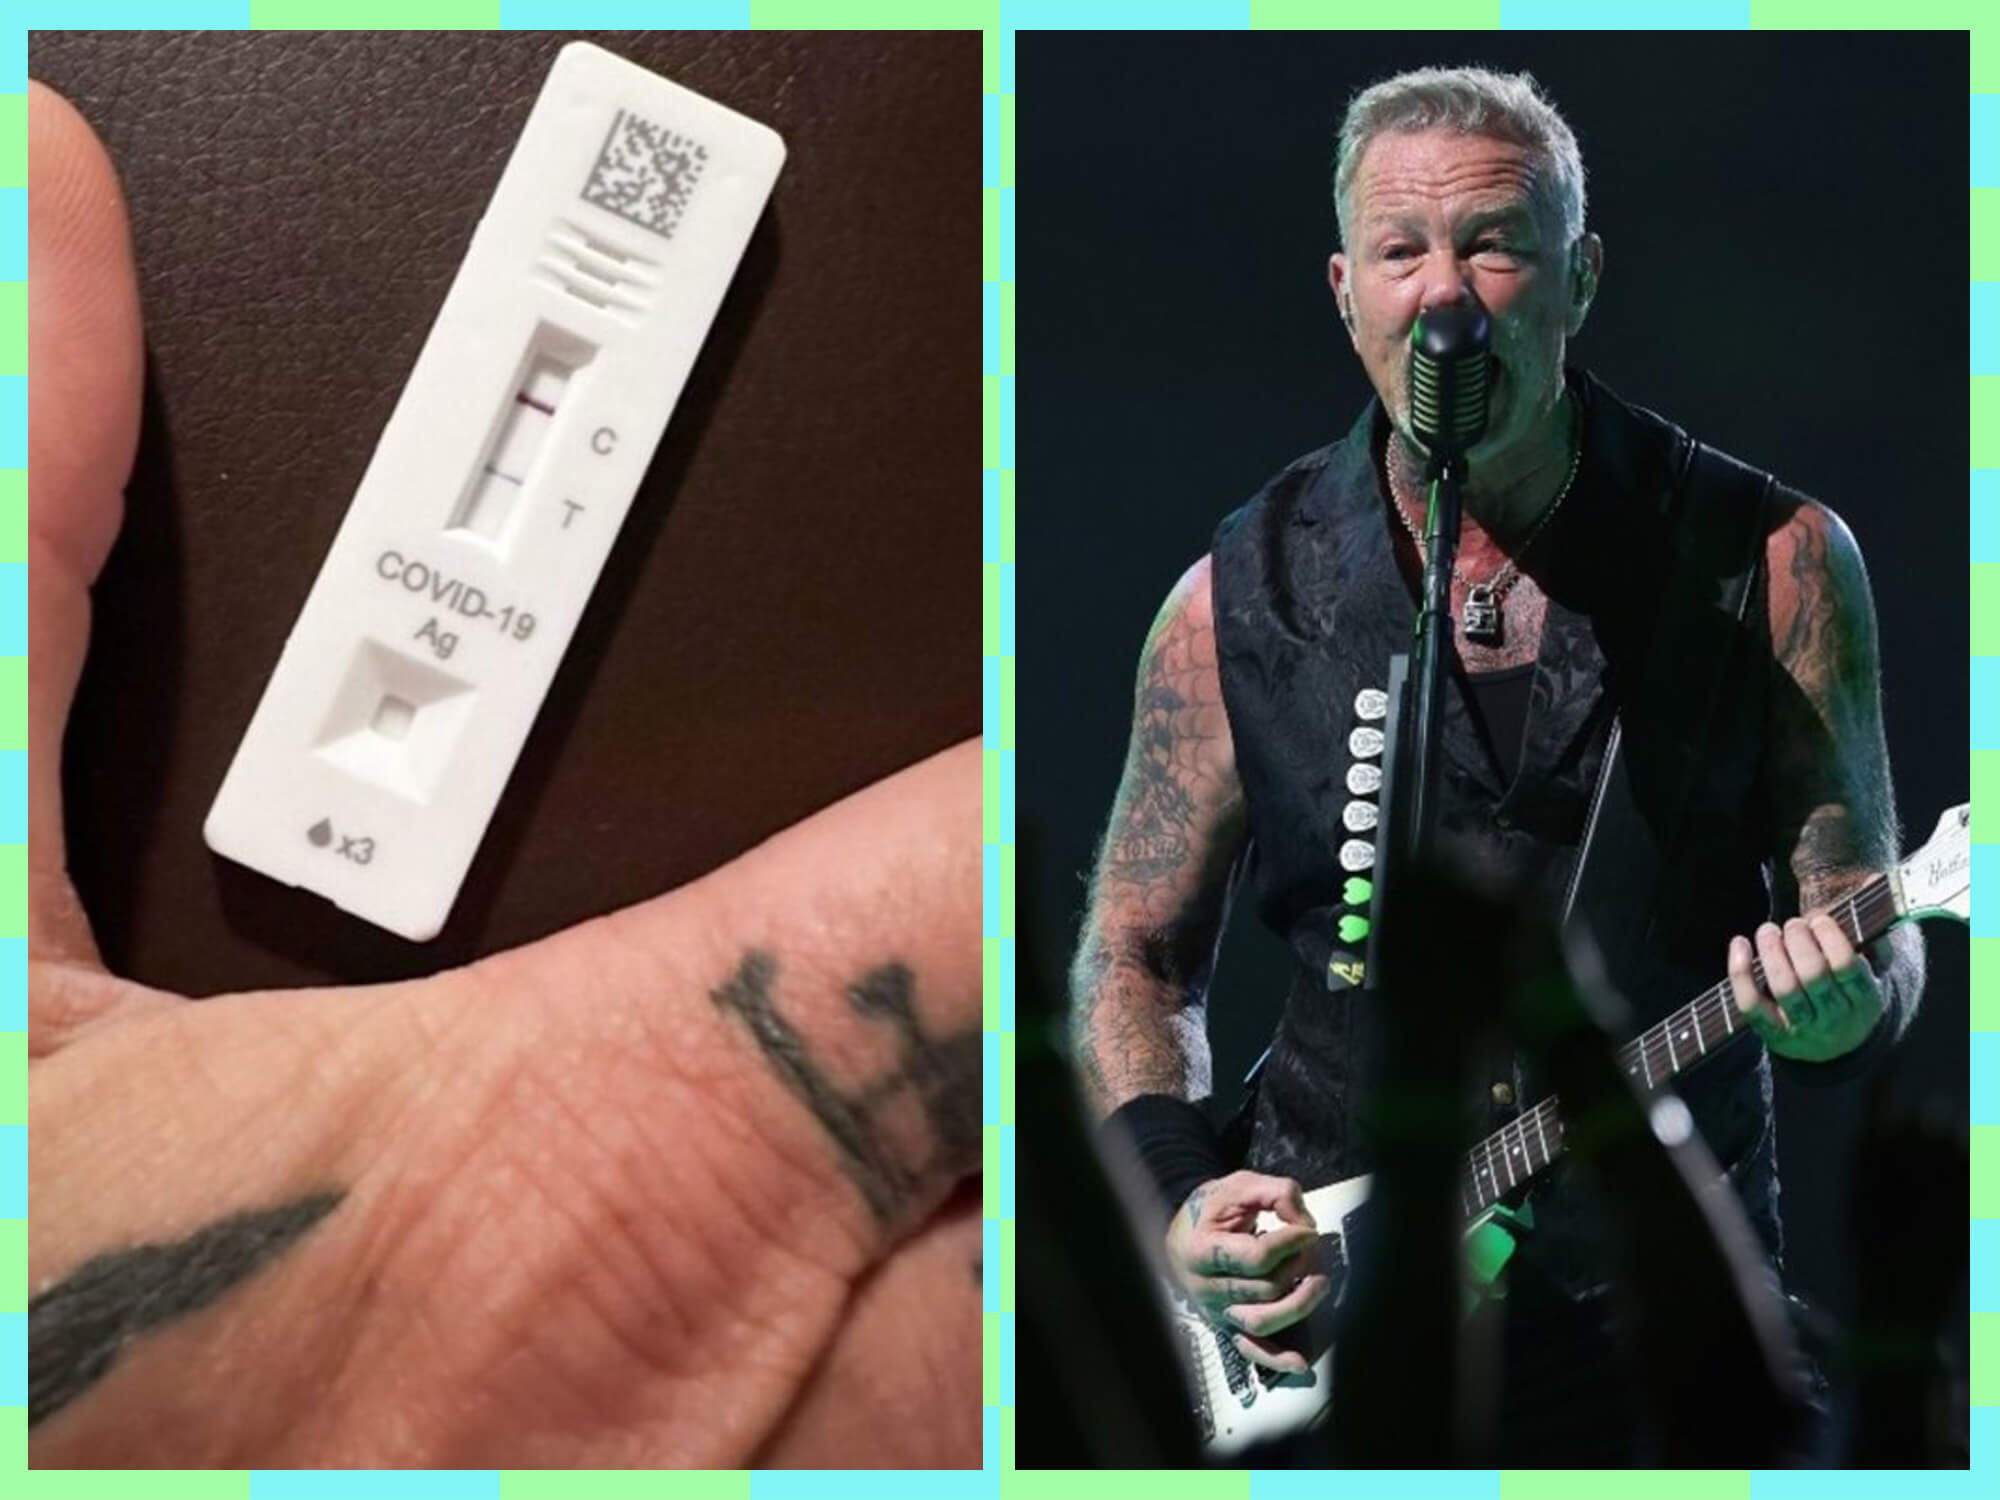 James Hetfield of Metallica catches Covid-19